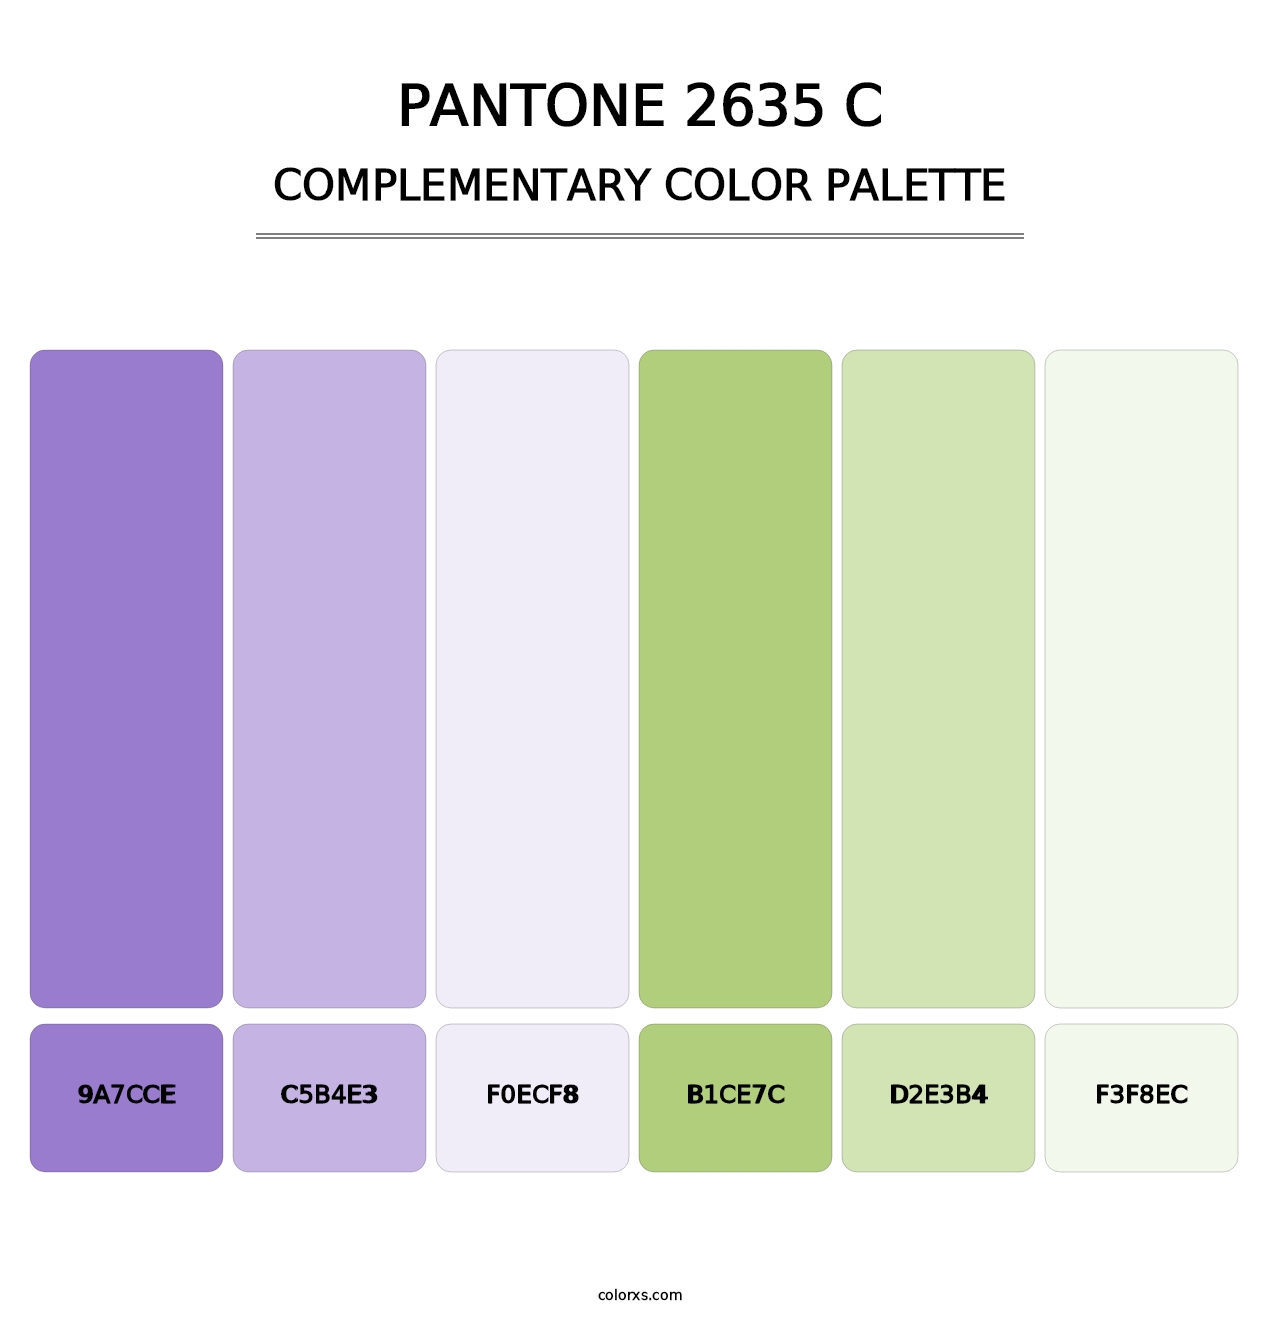 PANTONE 2635 C - Complementary Color Palette